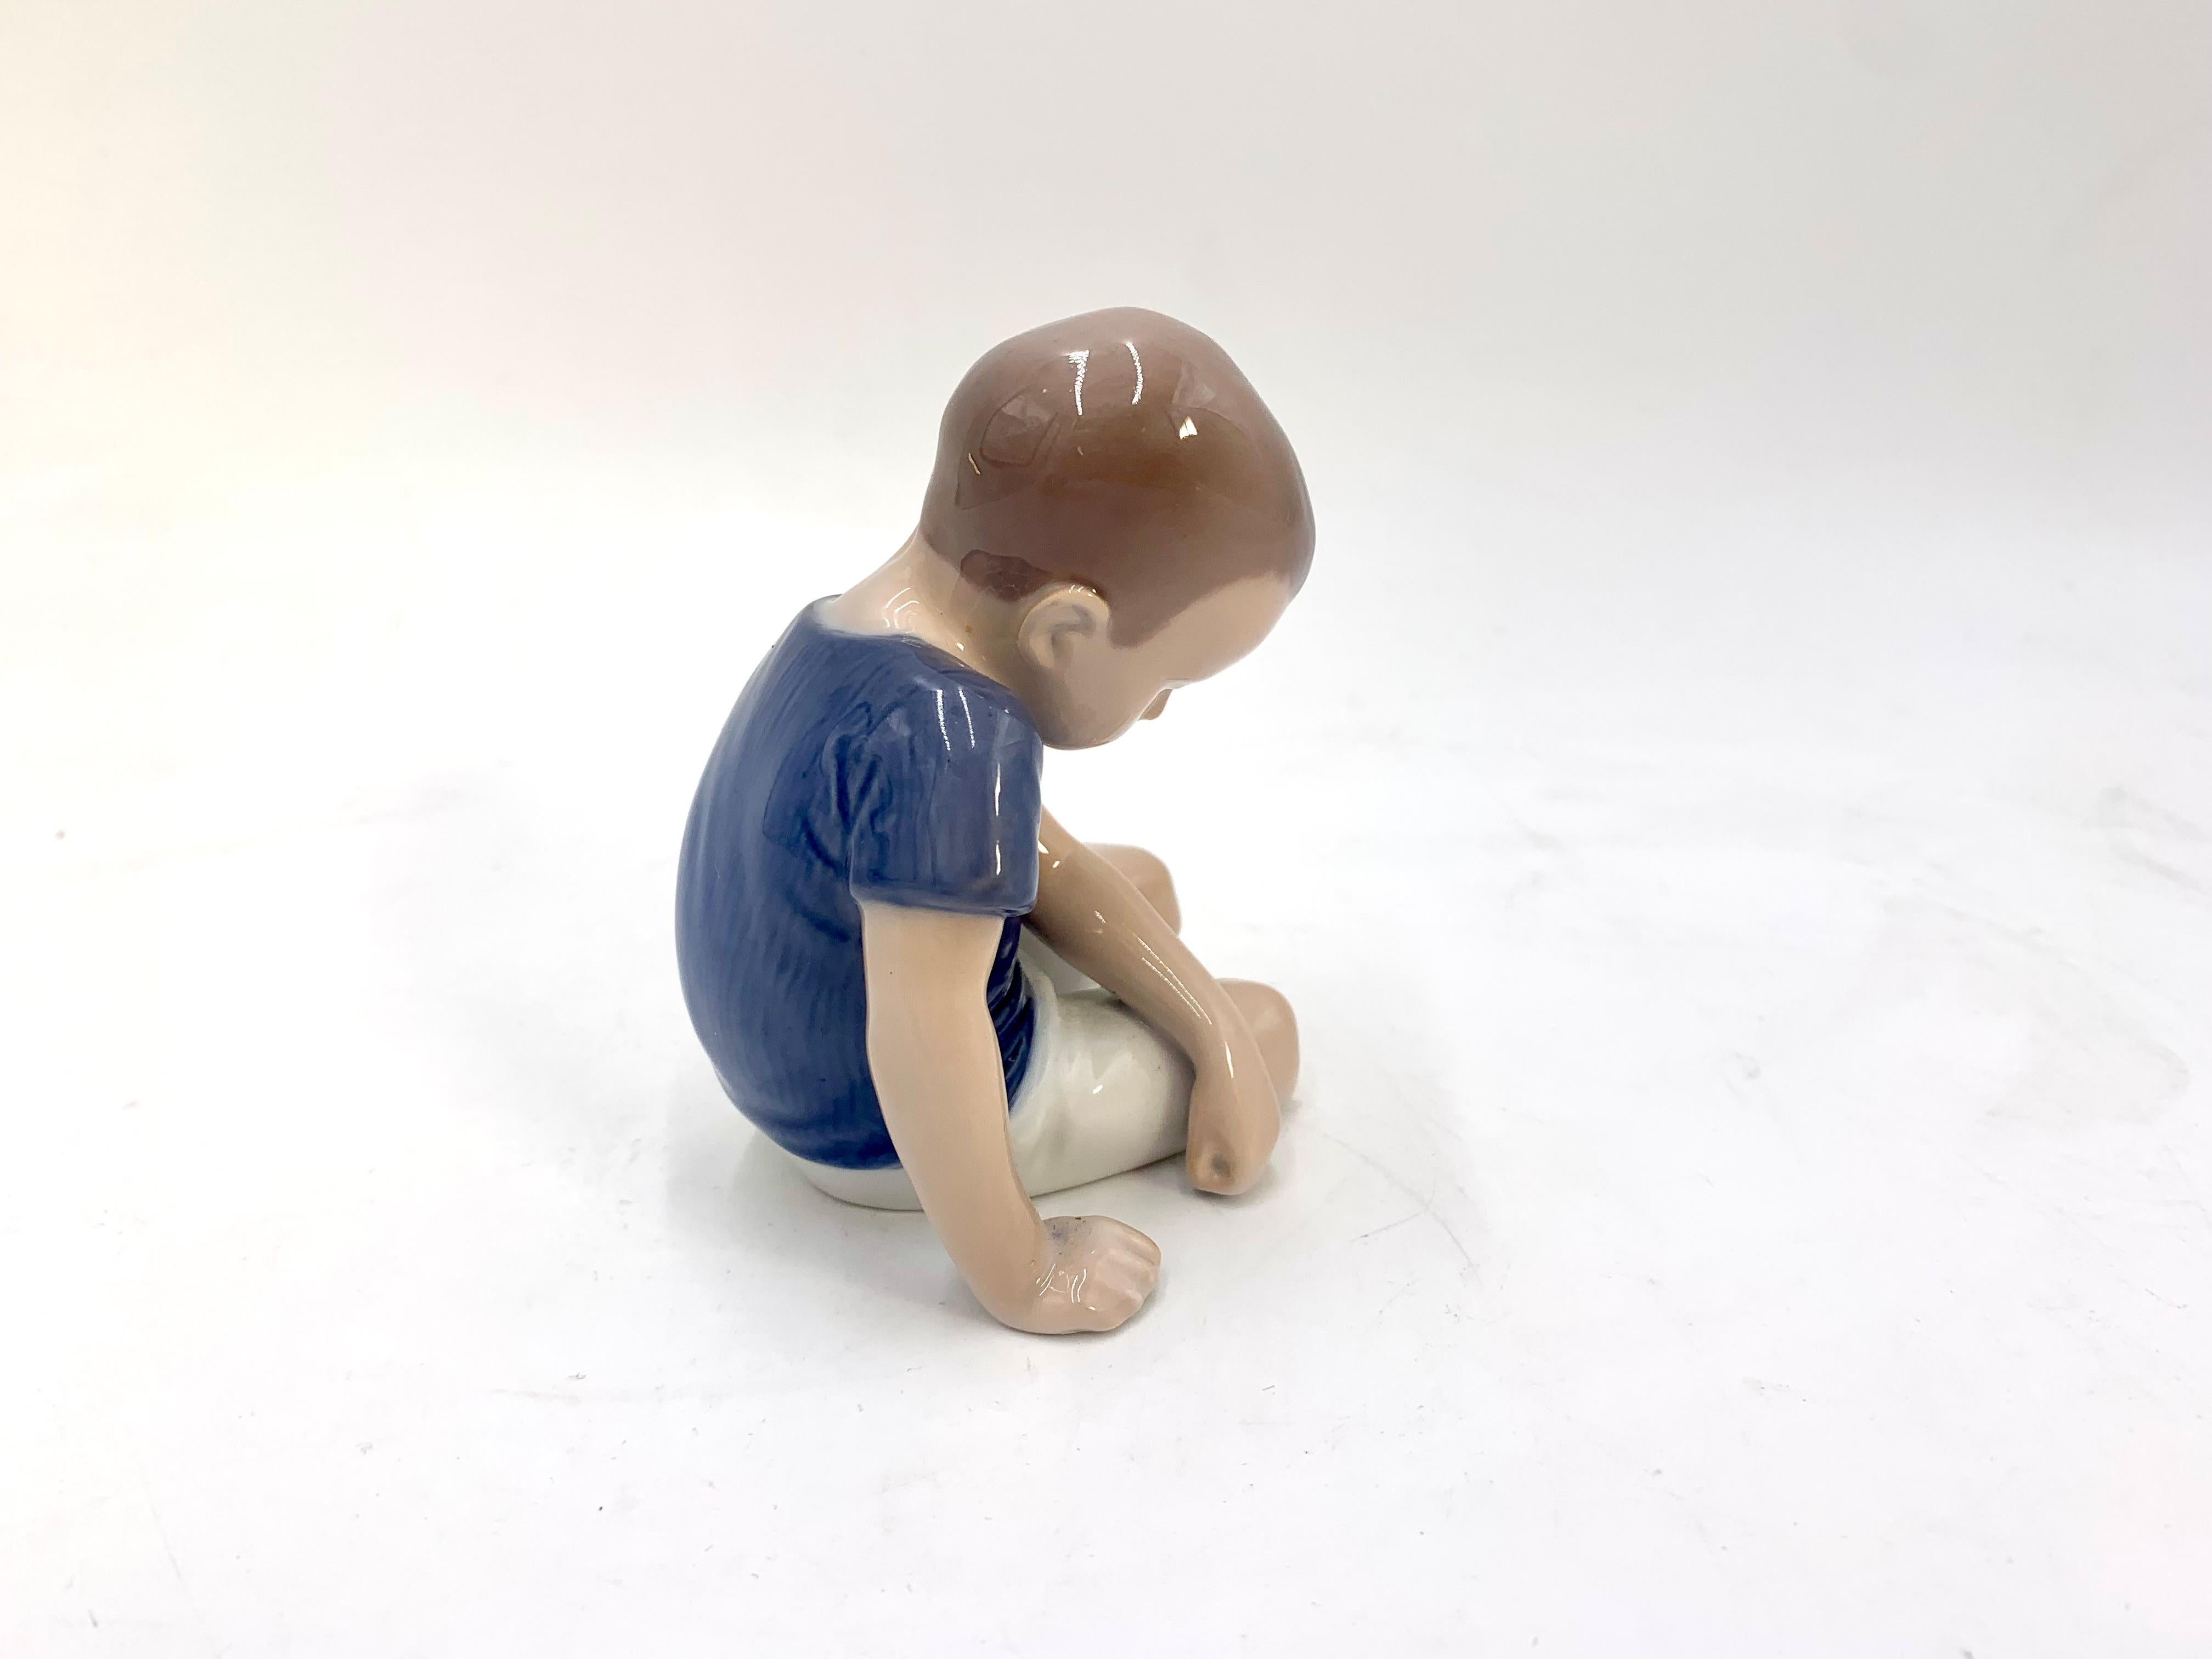 Danish Porcelain Figurine of a Boy, Bing & Grondahl, Denmark, 1950s / 1960s